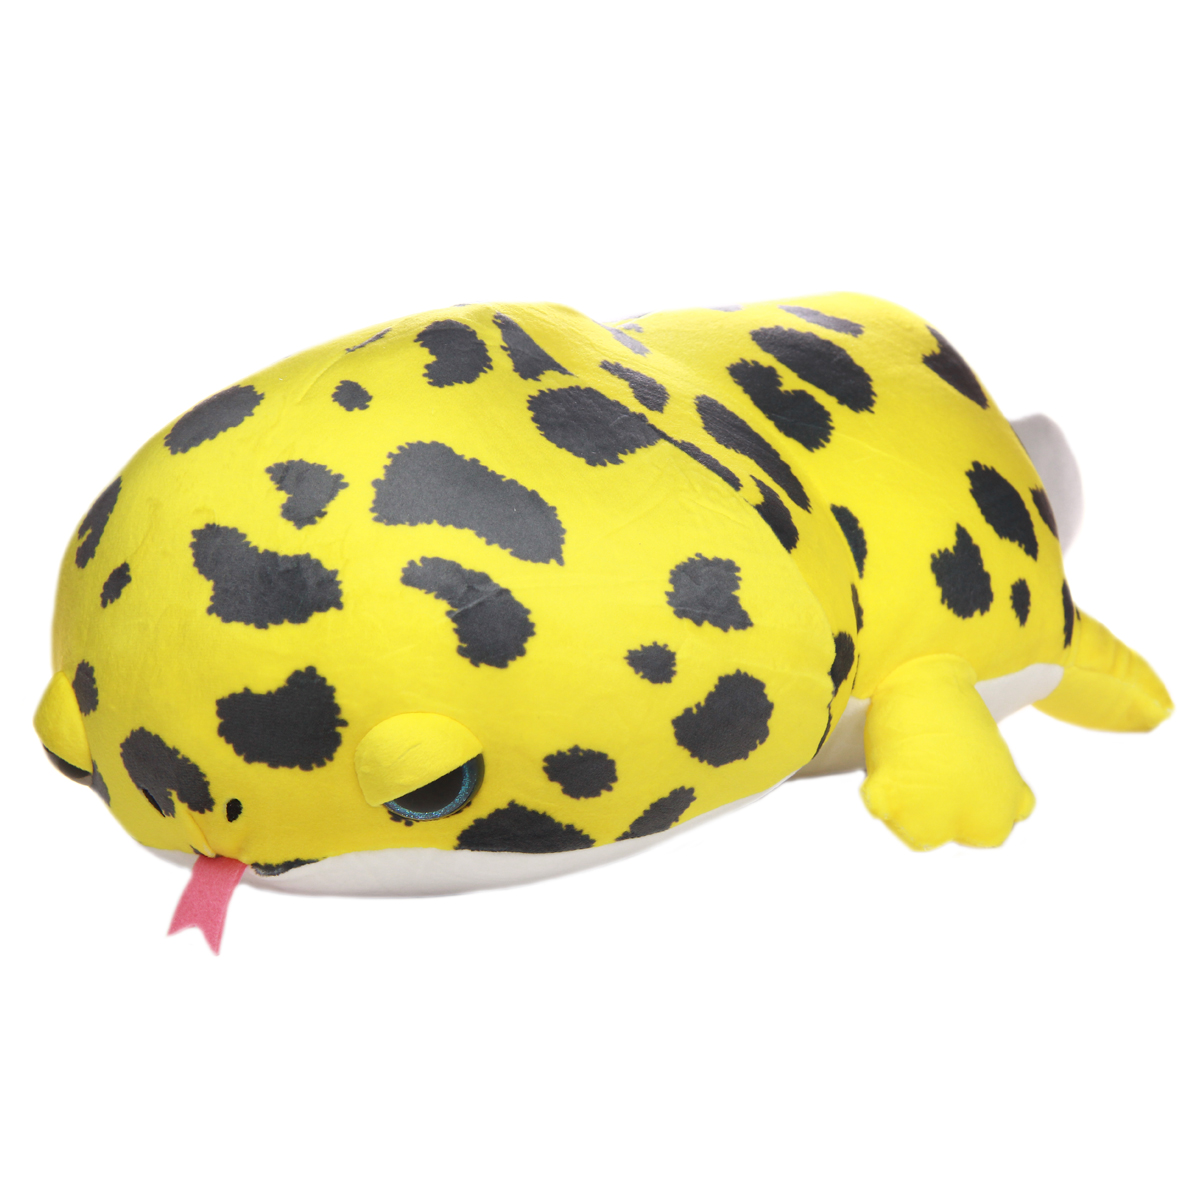 Leopard Gecko Plush Collection Lizard Plush Toy Super Soft Stuffed Animal Yellow Grey Big Size 21 Inches